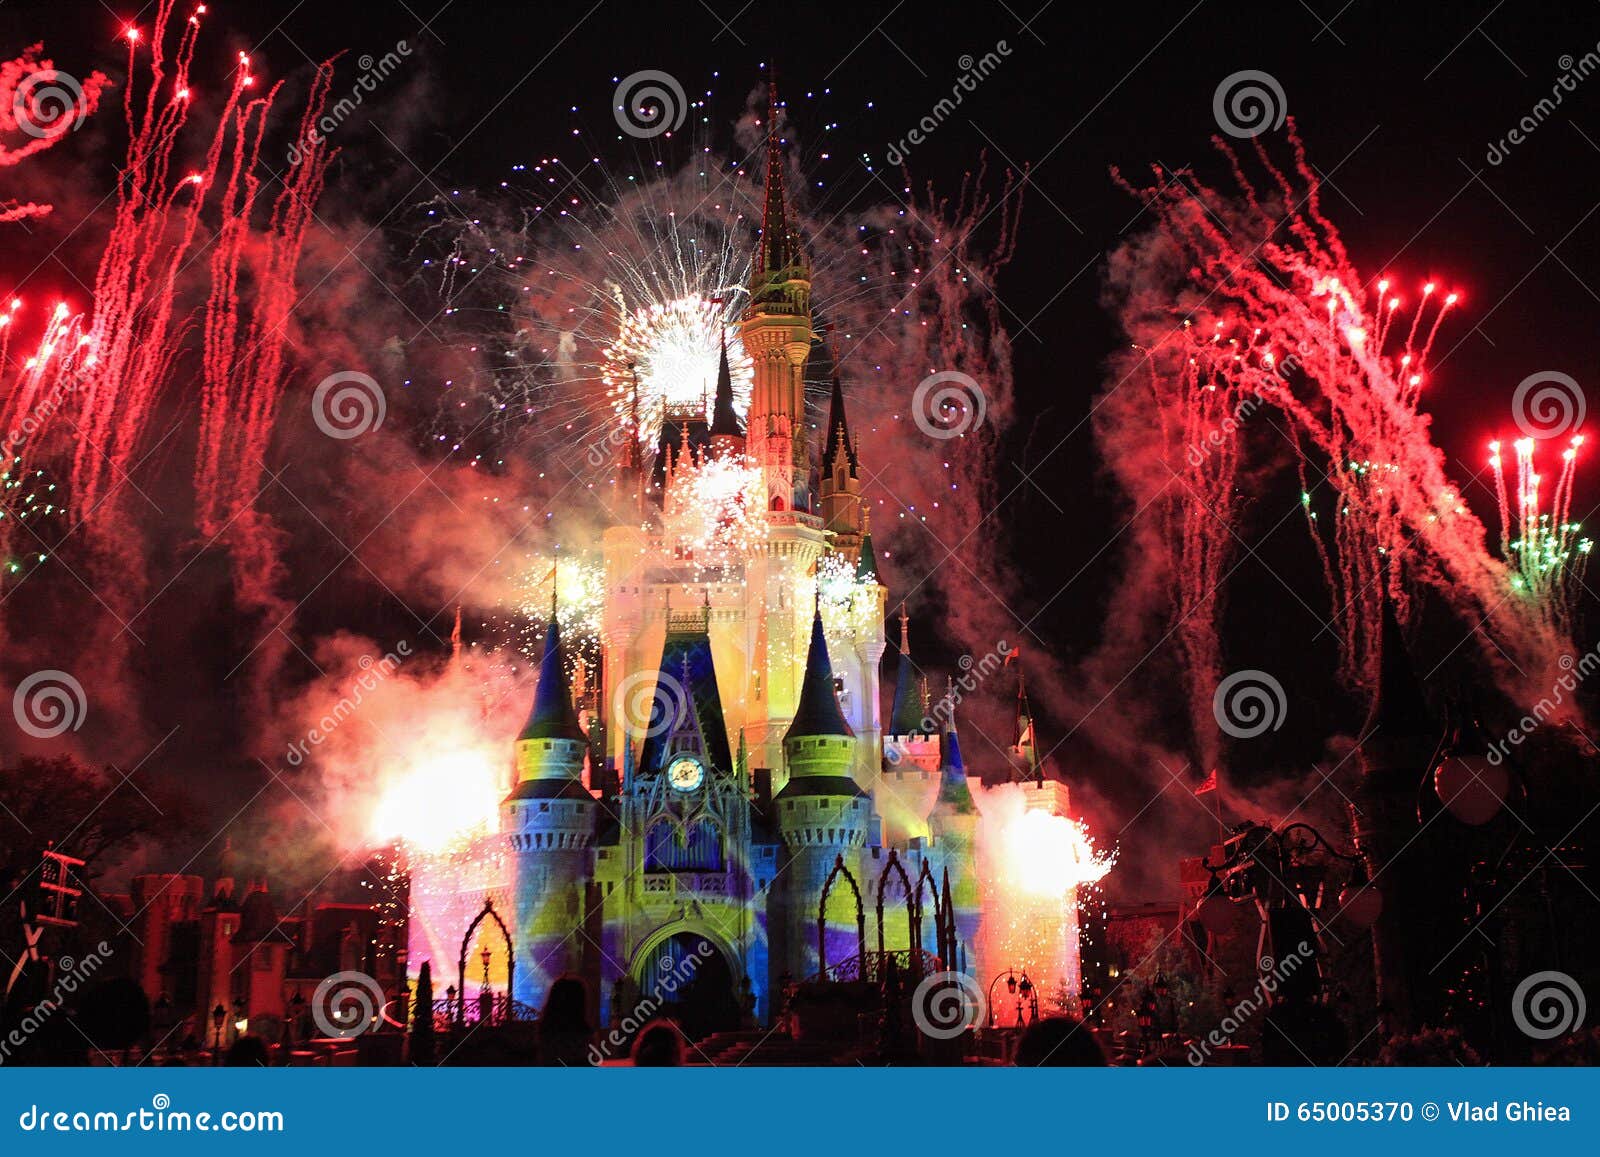 disney castle fireworks